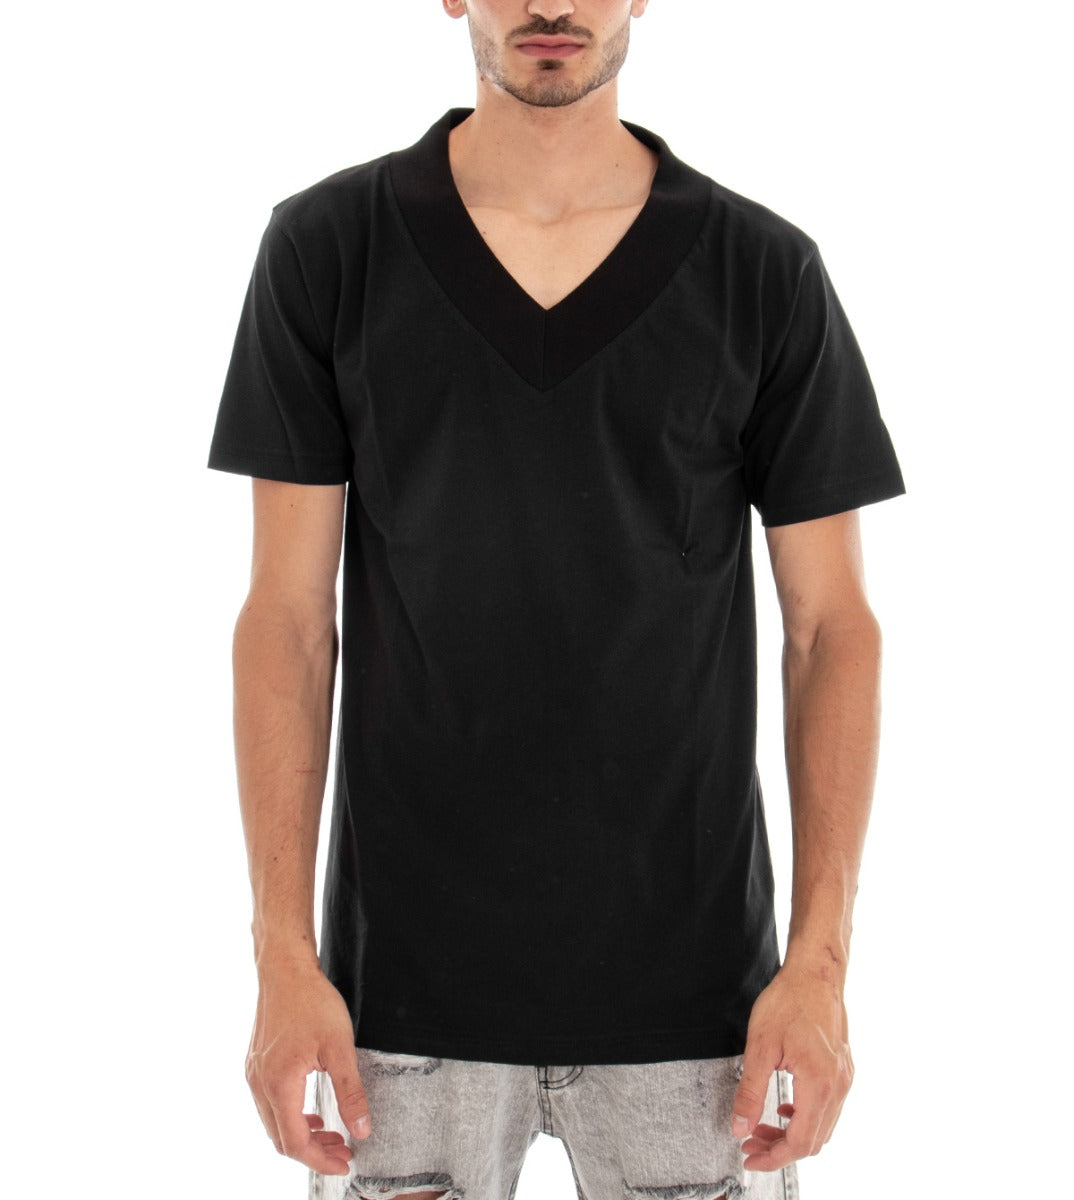 Men's T-shirt Short Sleeve V-Neck Solid Color Black Cotton GIOSAL